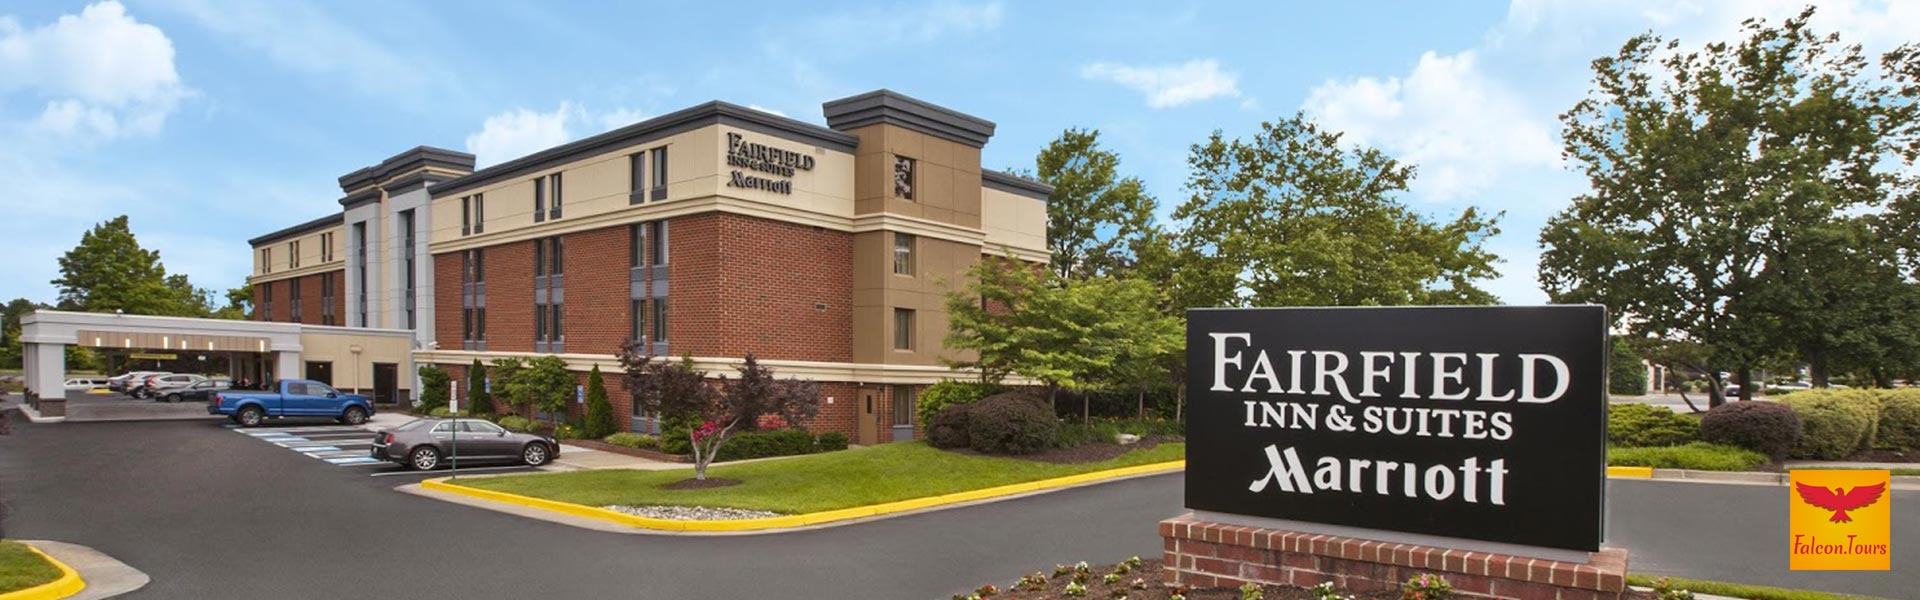 Falcon Cab & Falcon Tours - Call @ (703) 445-4450 - Fairfield Inn & Suites